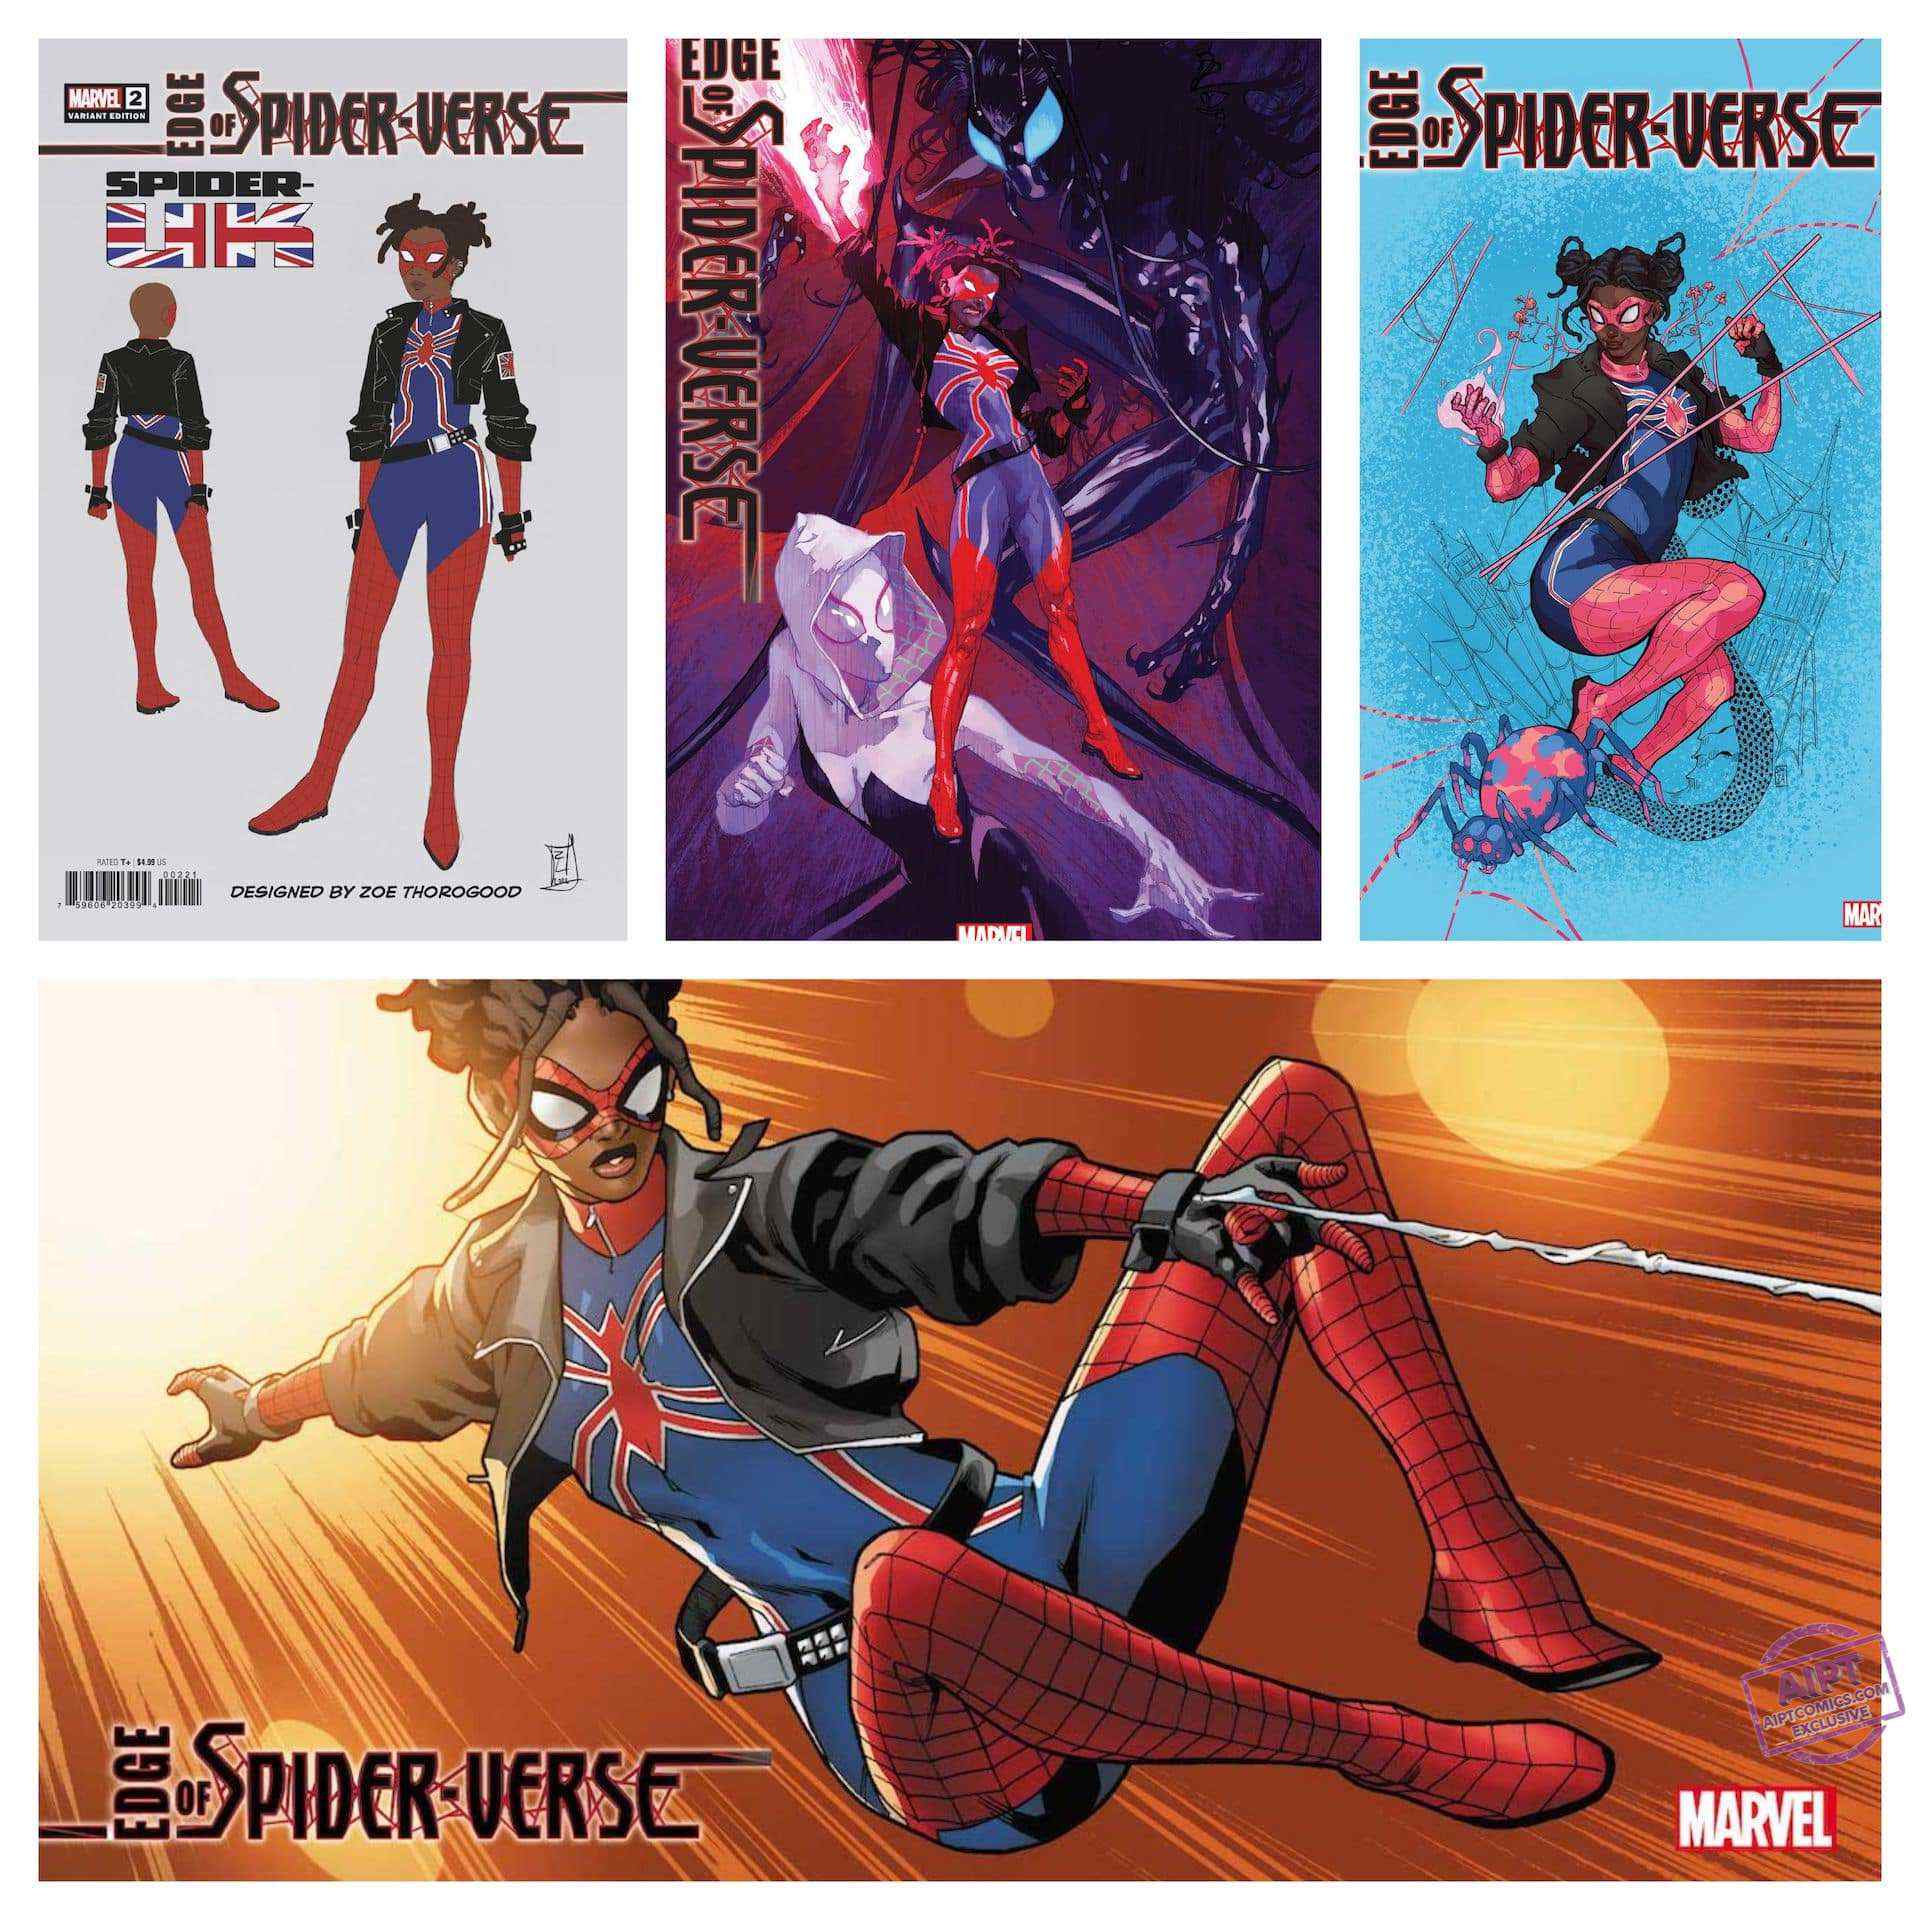 Marvel unveils Spider-UK in 'Edge of Spider-Verse' #2 reveal